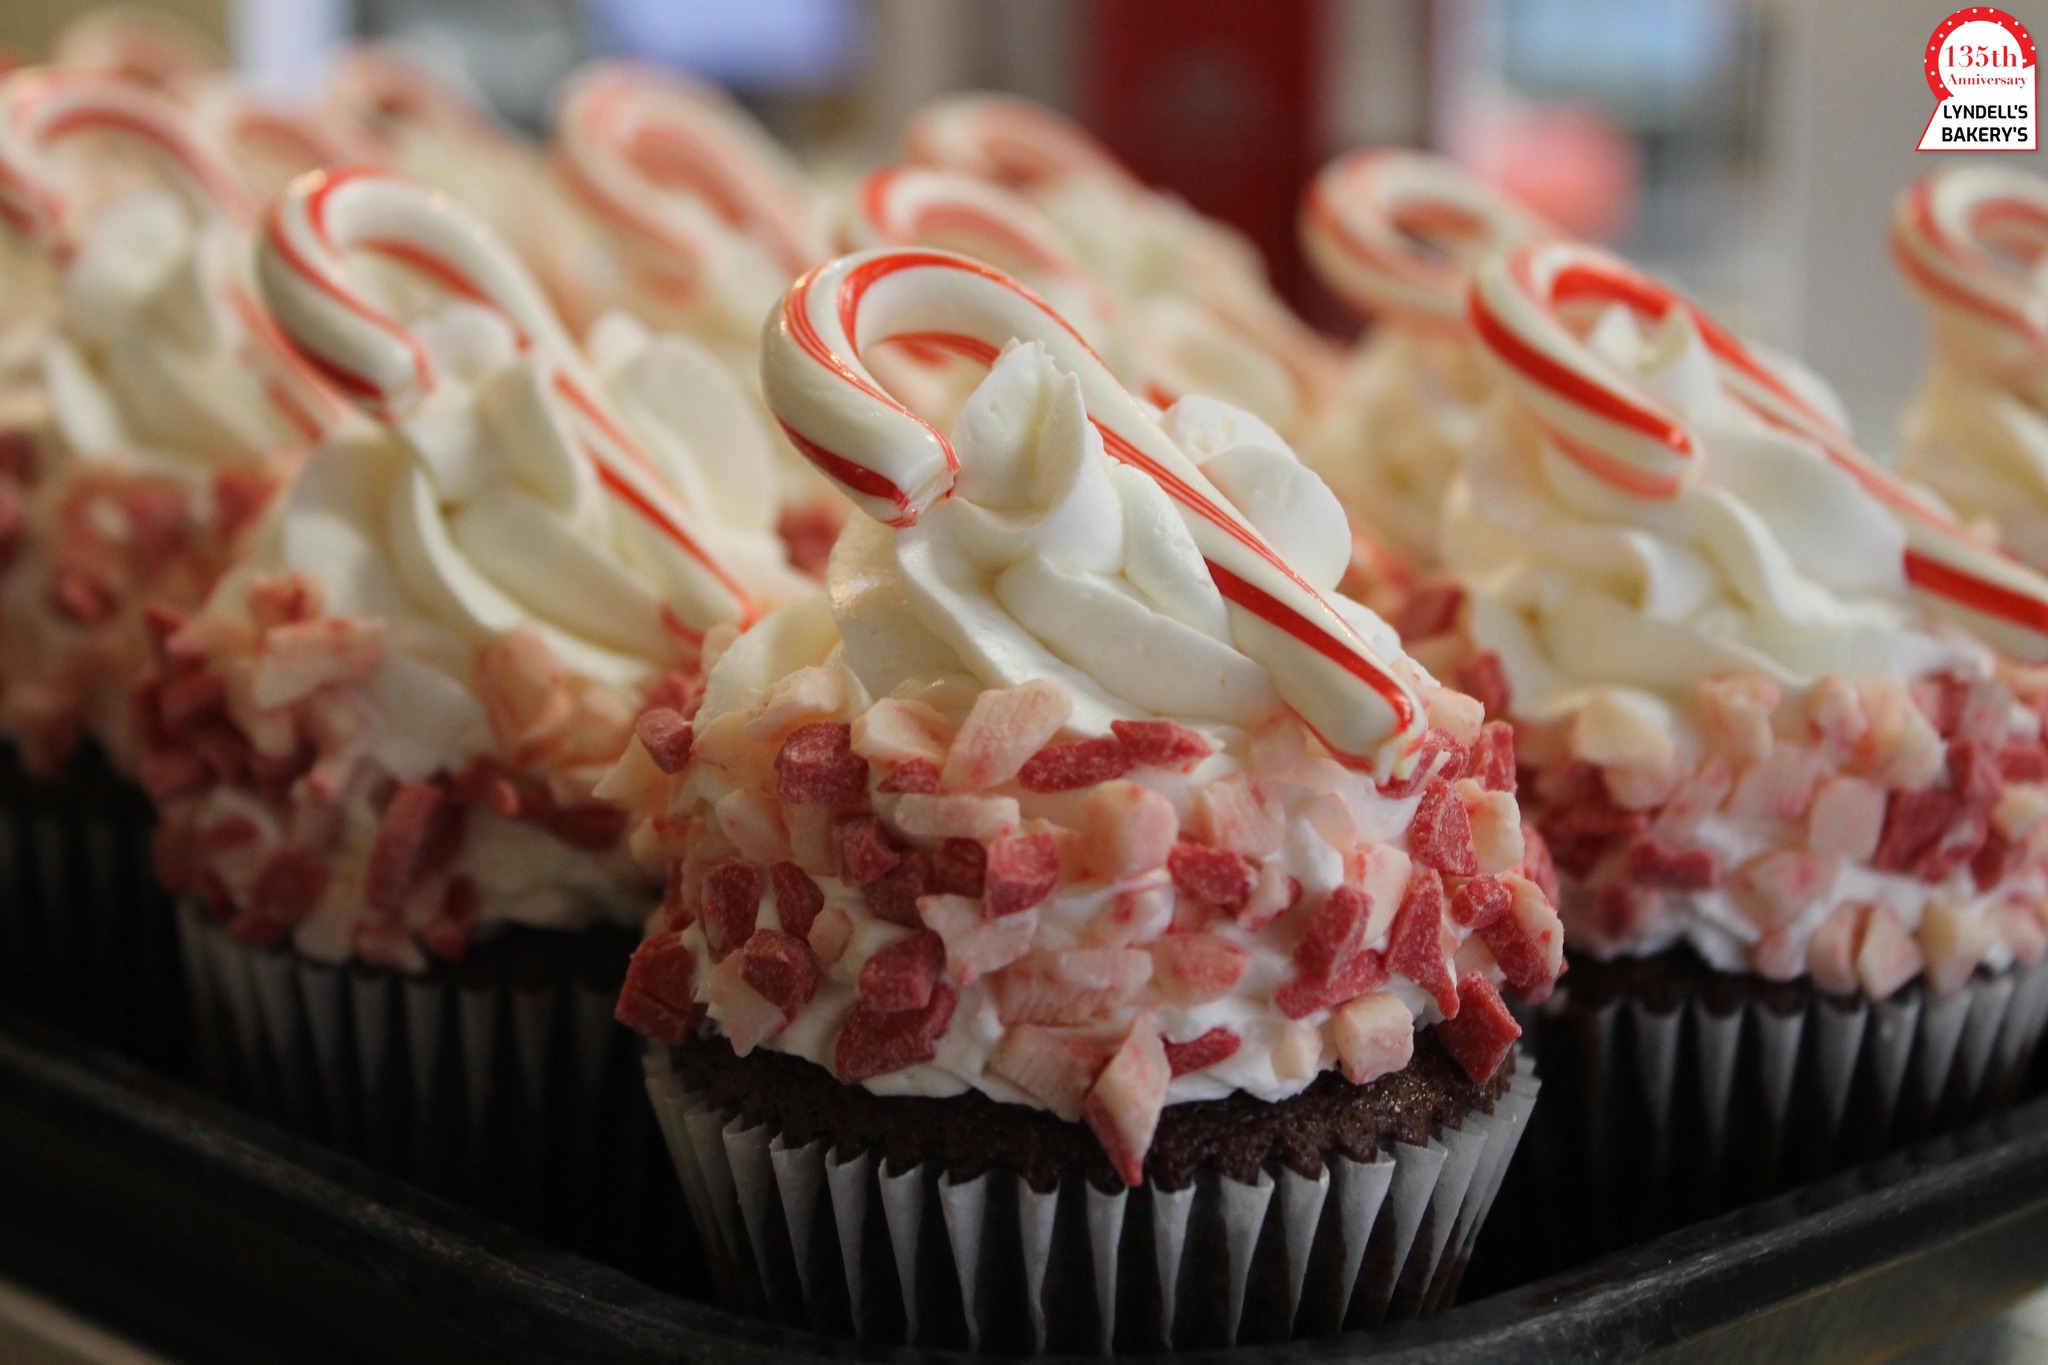 Best Cupcake bakeries in Boston - Lyndell's Bakery